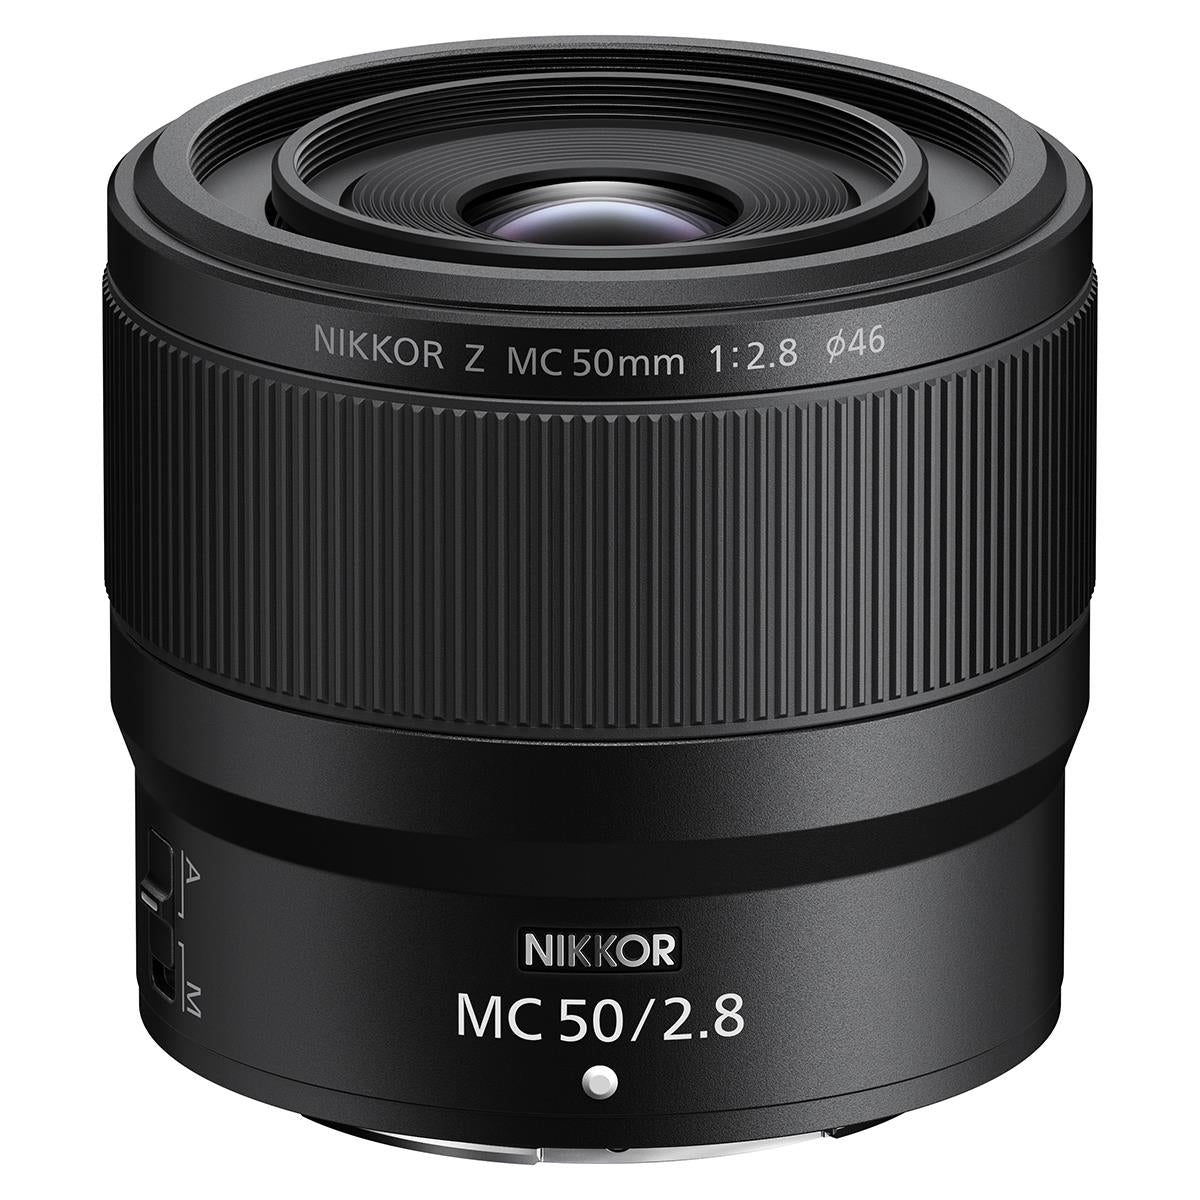 Nikon NIKKOR Z MC 50mm f/2.8 Macro Lens (International Model)